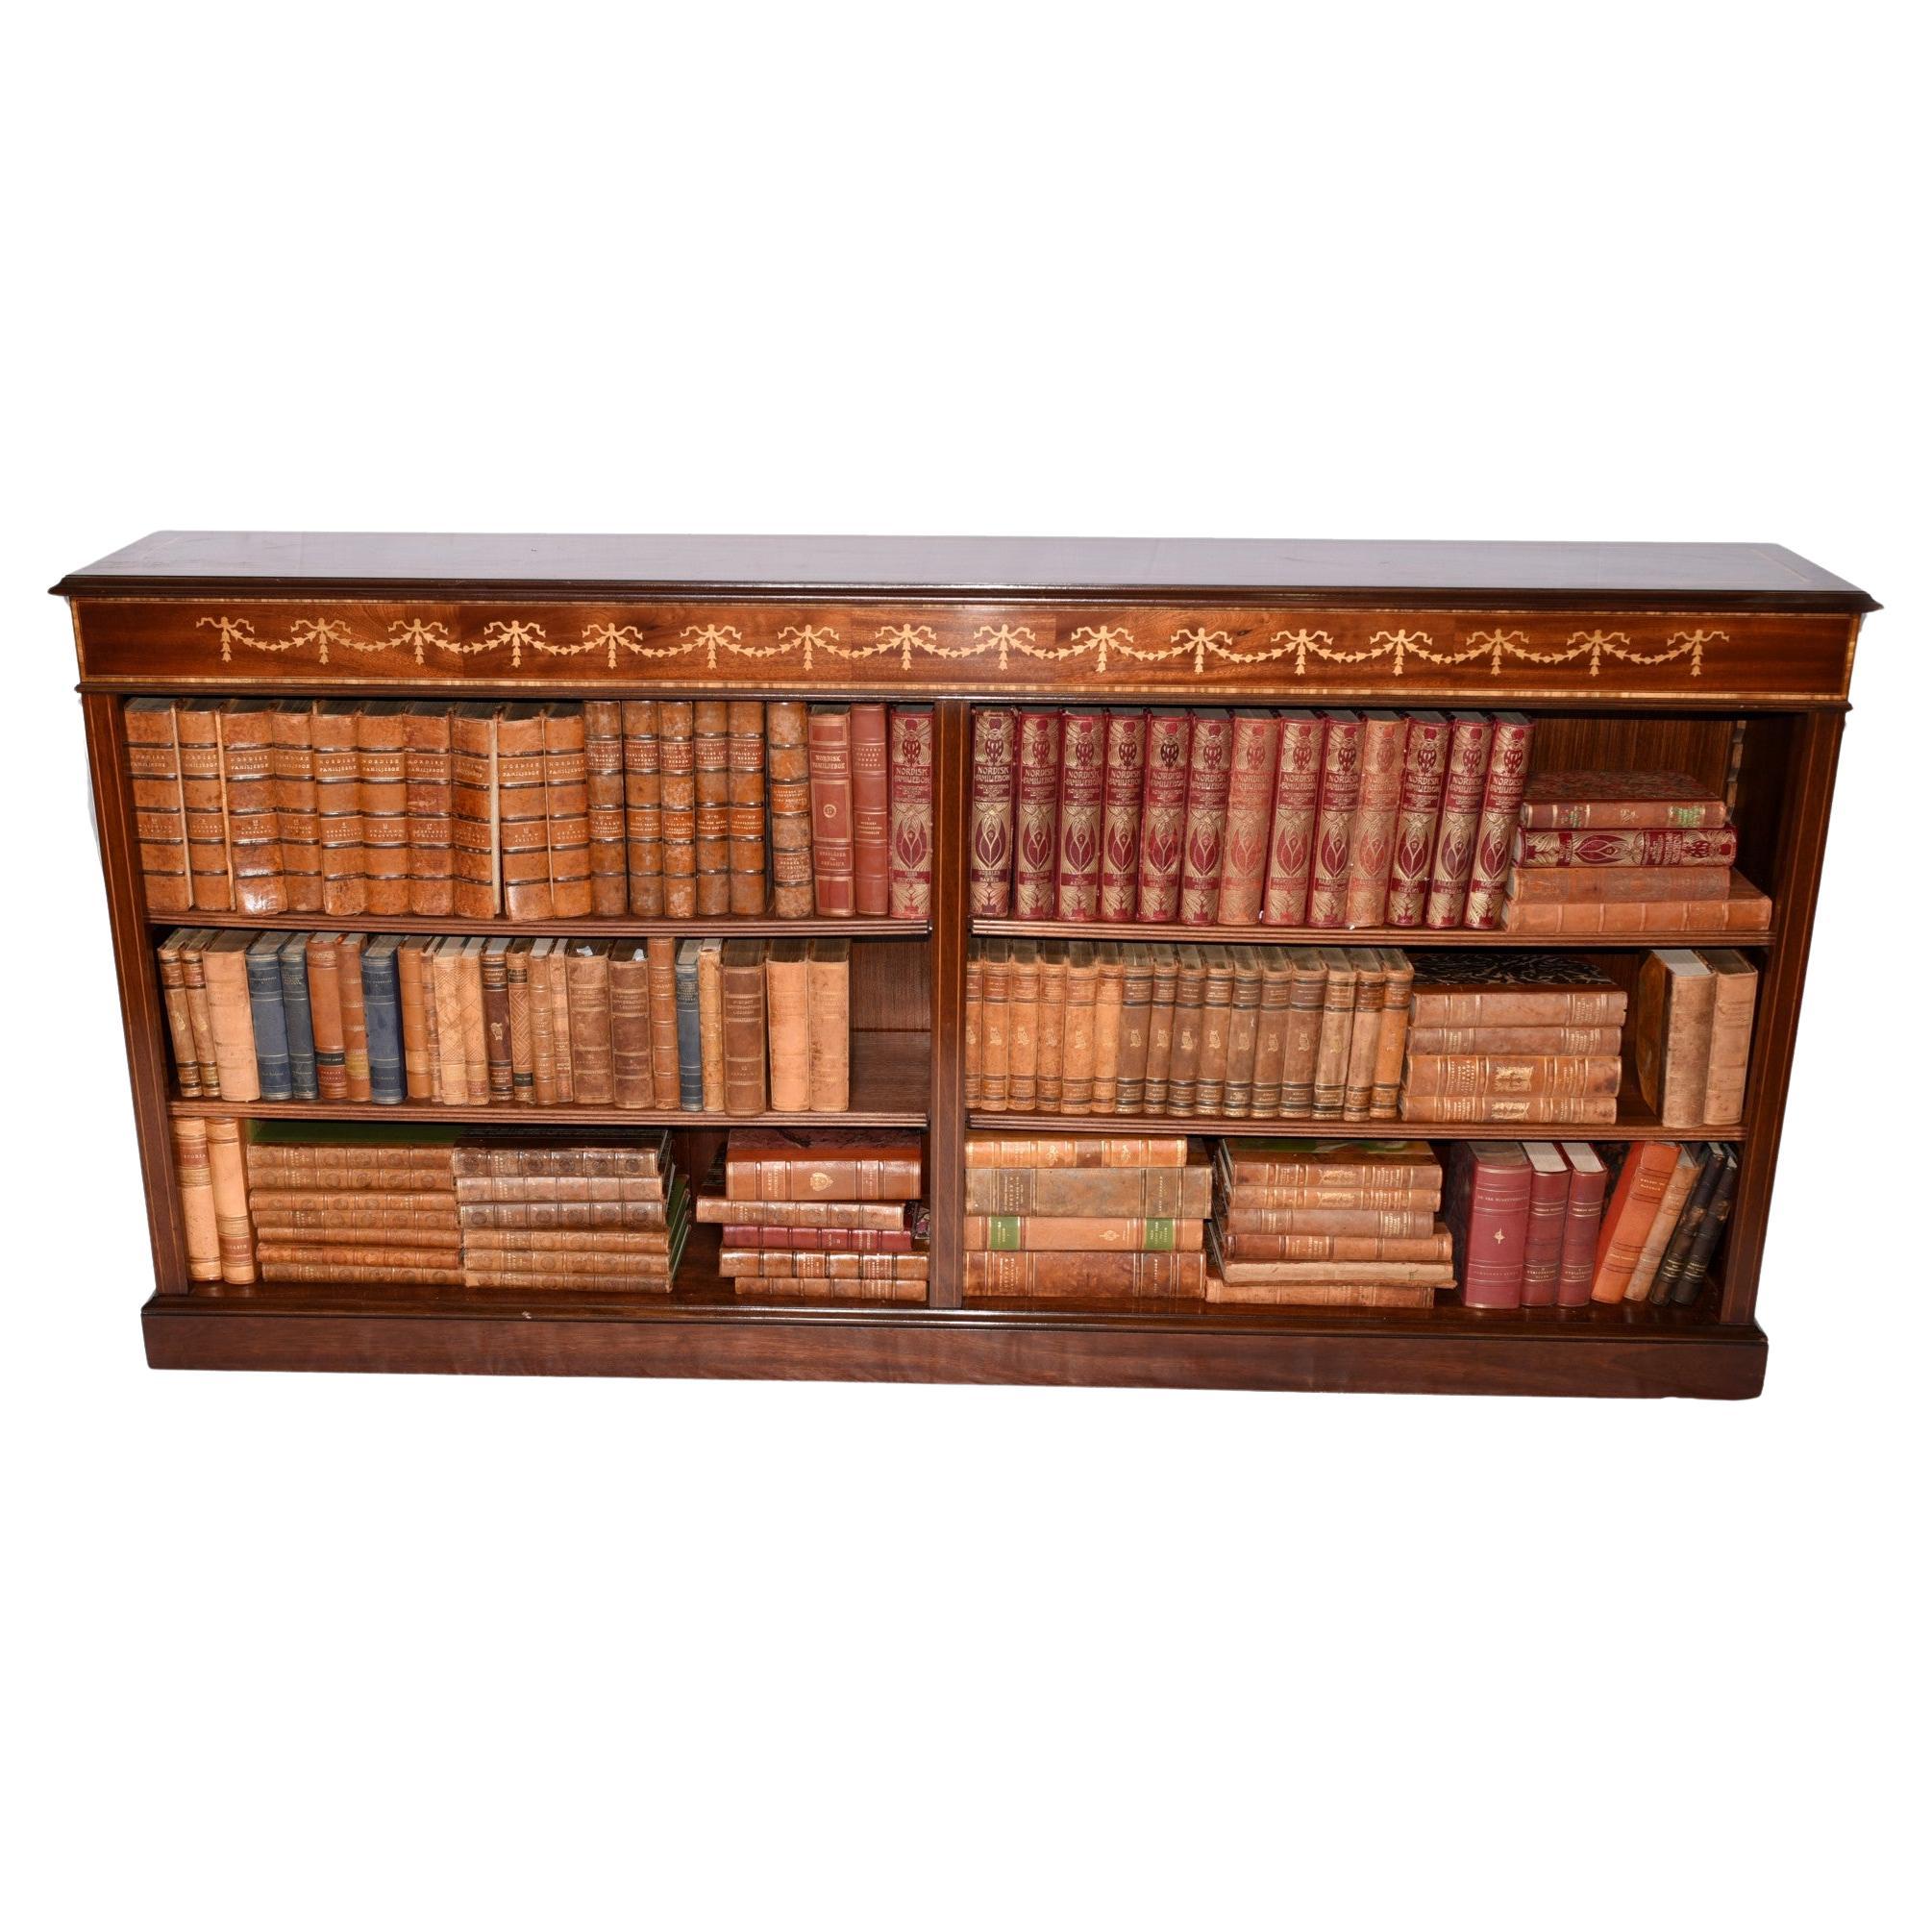 Wide Regency Open Bookcase - Mahogany Inlay Library Study